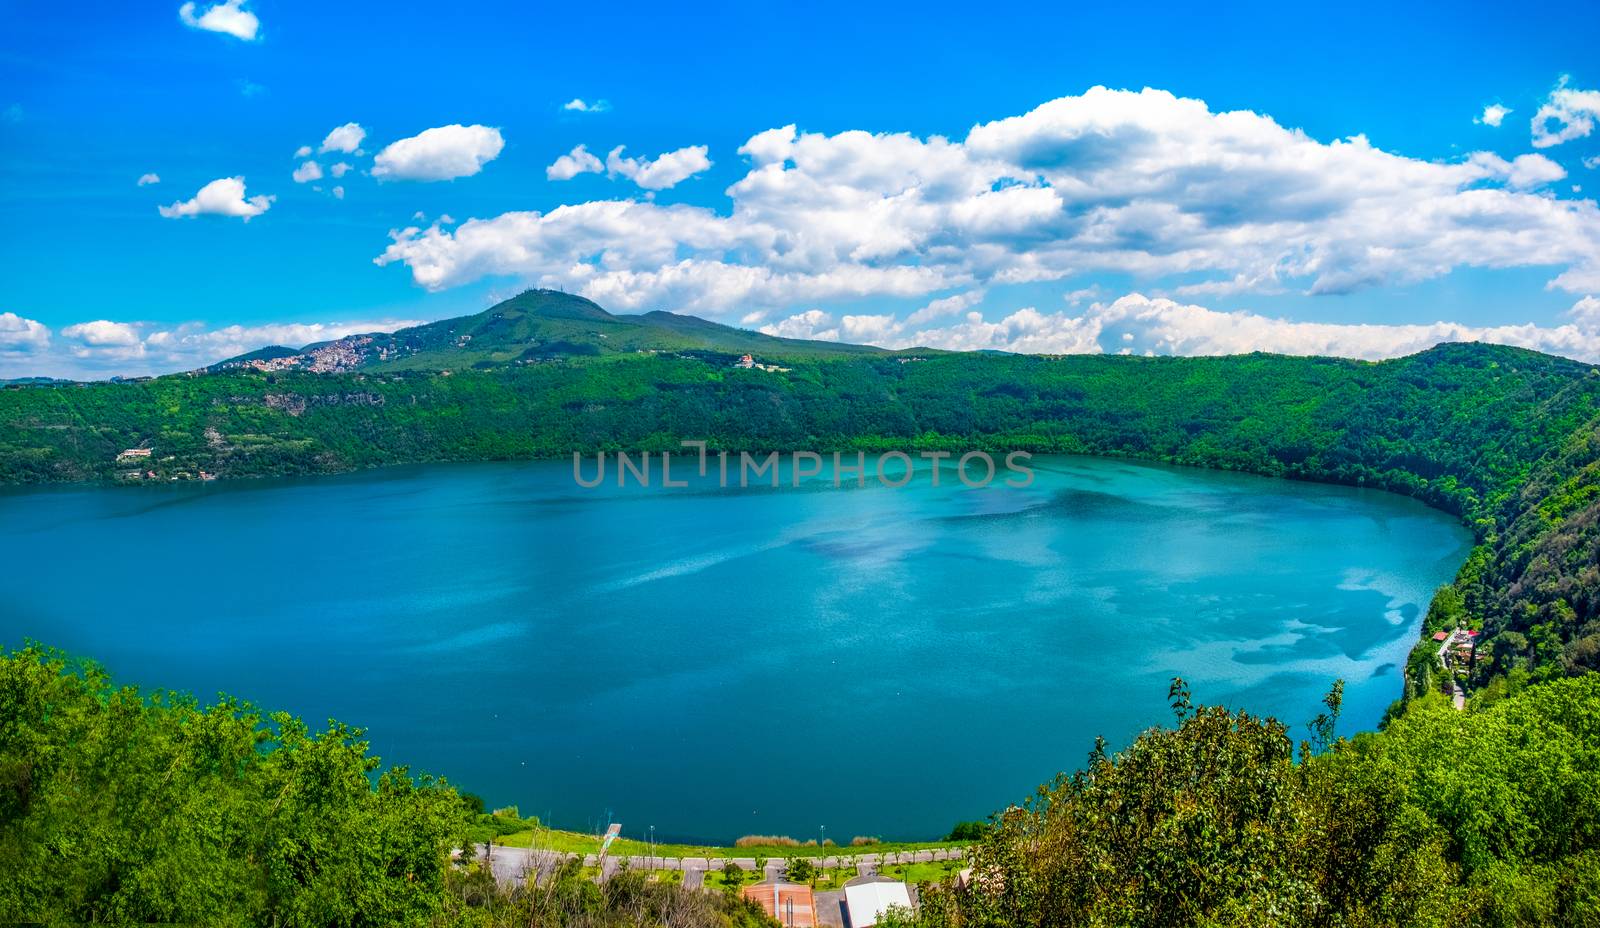 Lake Albano or Lago di Albano in Lazio - deepest crater lake in Italy on the Alban Hills of Castelli Romani area near Rome by LucaLorenzelli